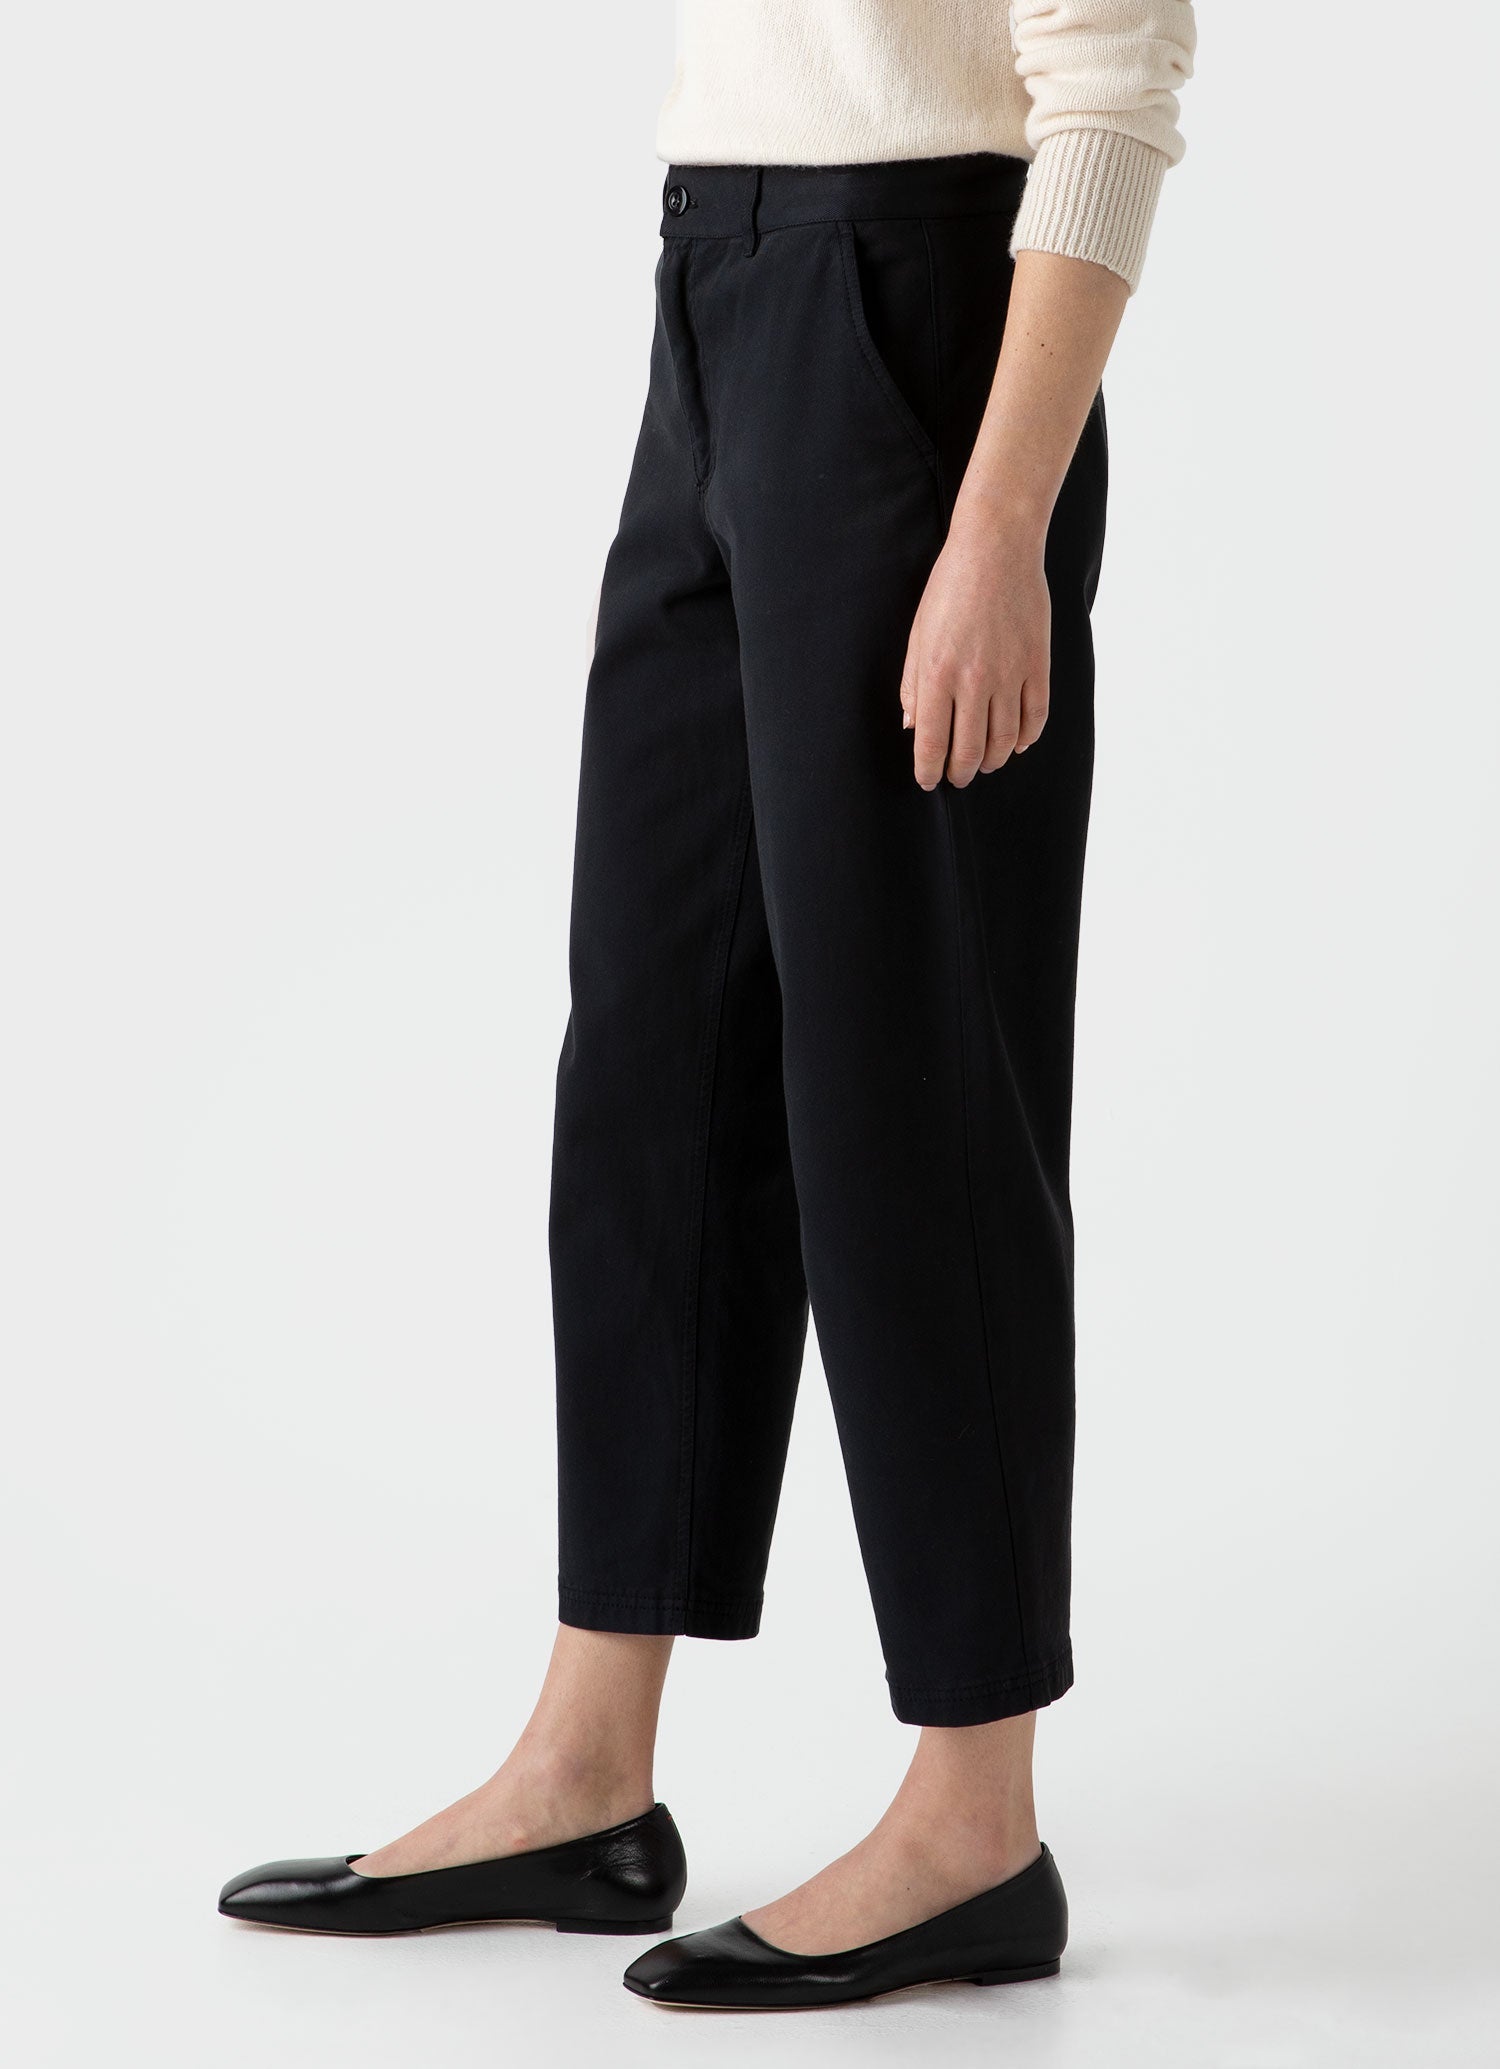 Women Capri Trousers Ladies Three Quarter Cropped Elasticated Soft Summer  Pants | eBay